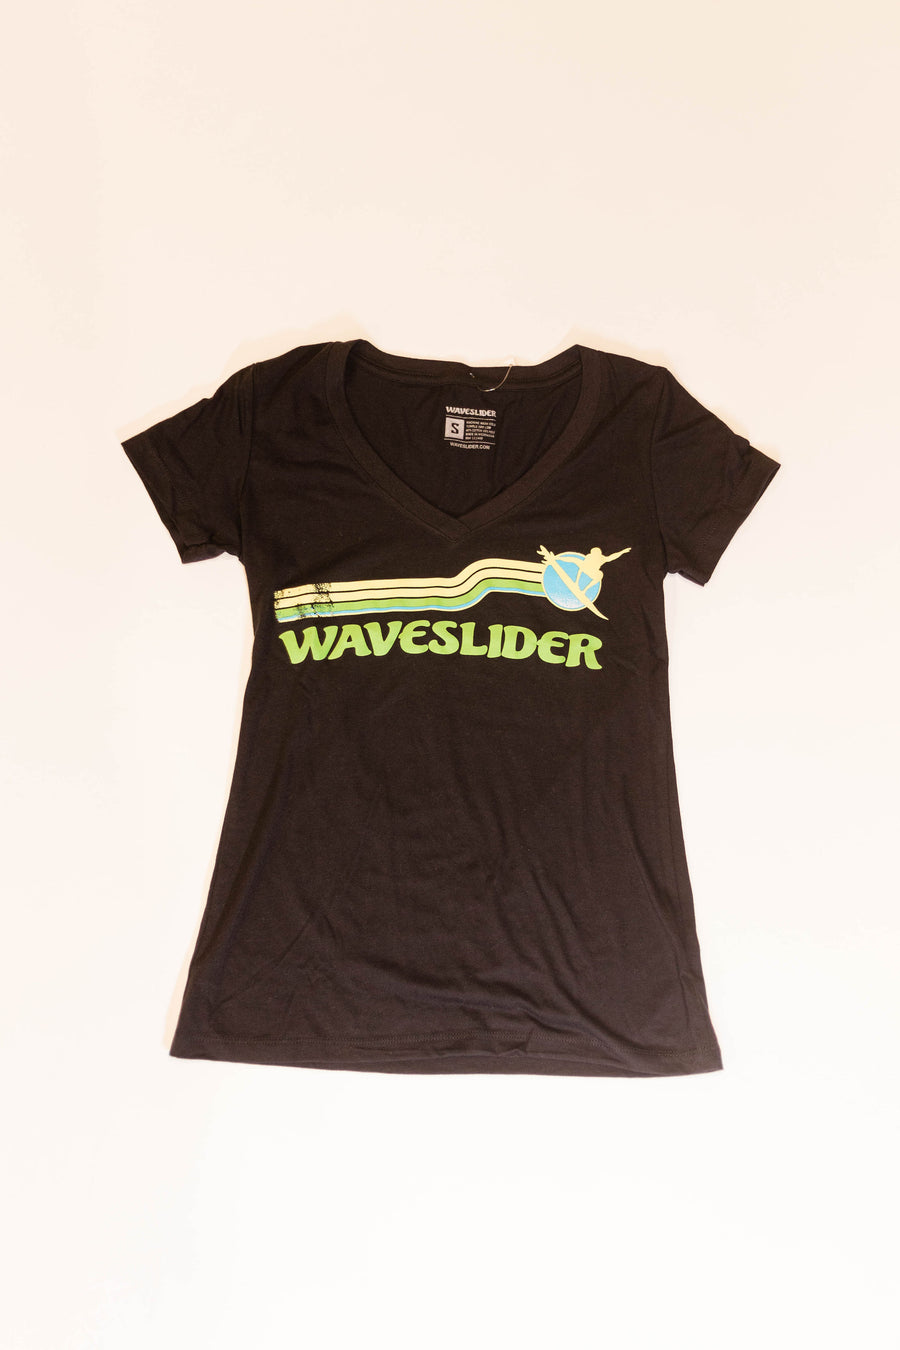 Waveslider Retro Womens T-Shirt Black